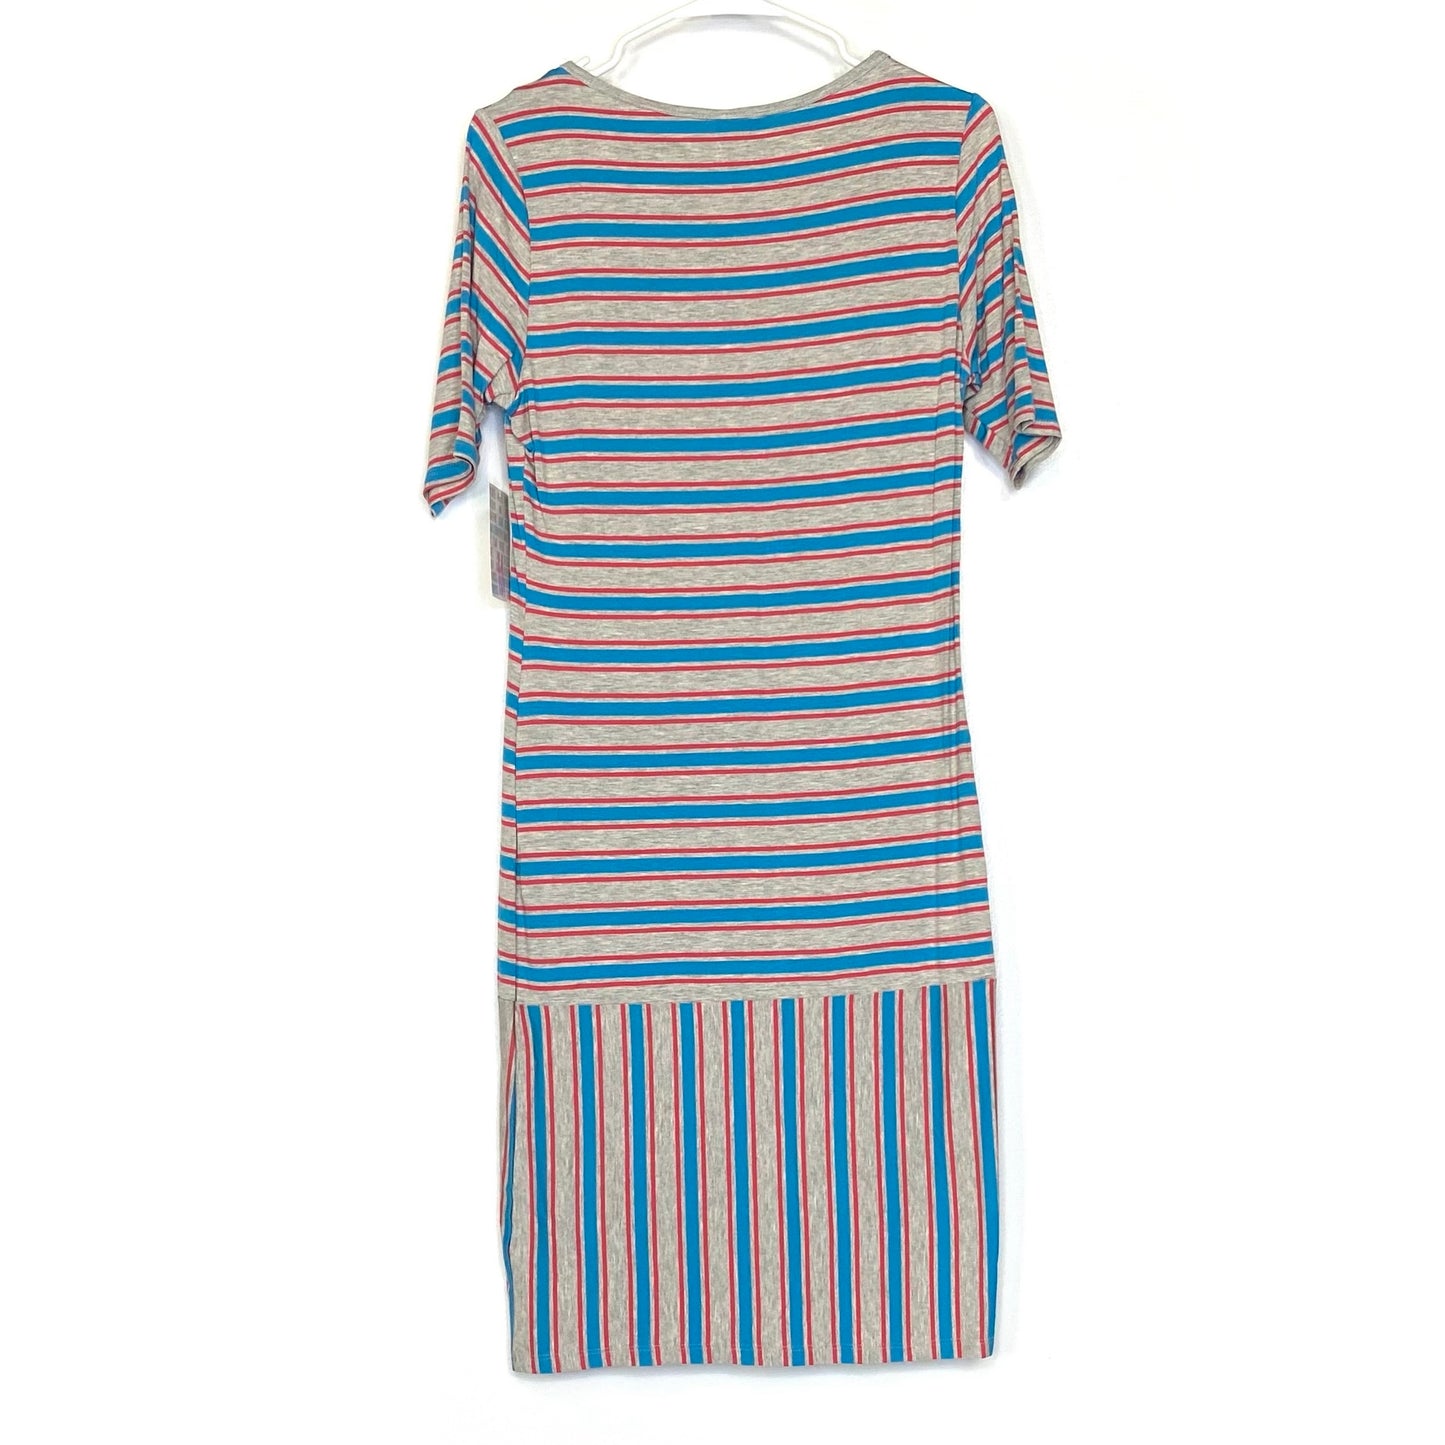 LuLaRoe Womens M Light Gray/Blue/Red Striped Julia Shift Dress Scoop Neck ½ Sleeves NWT